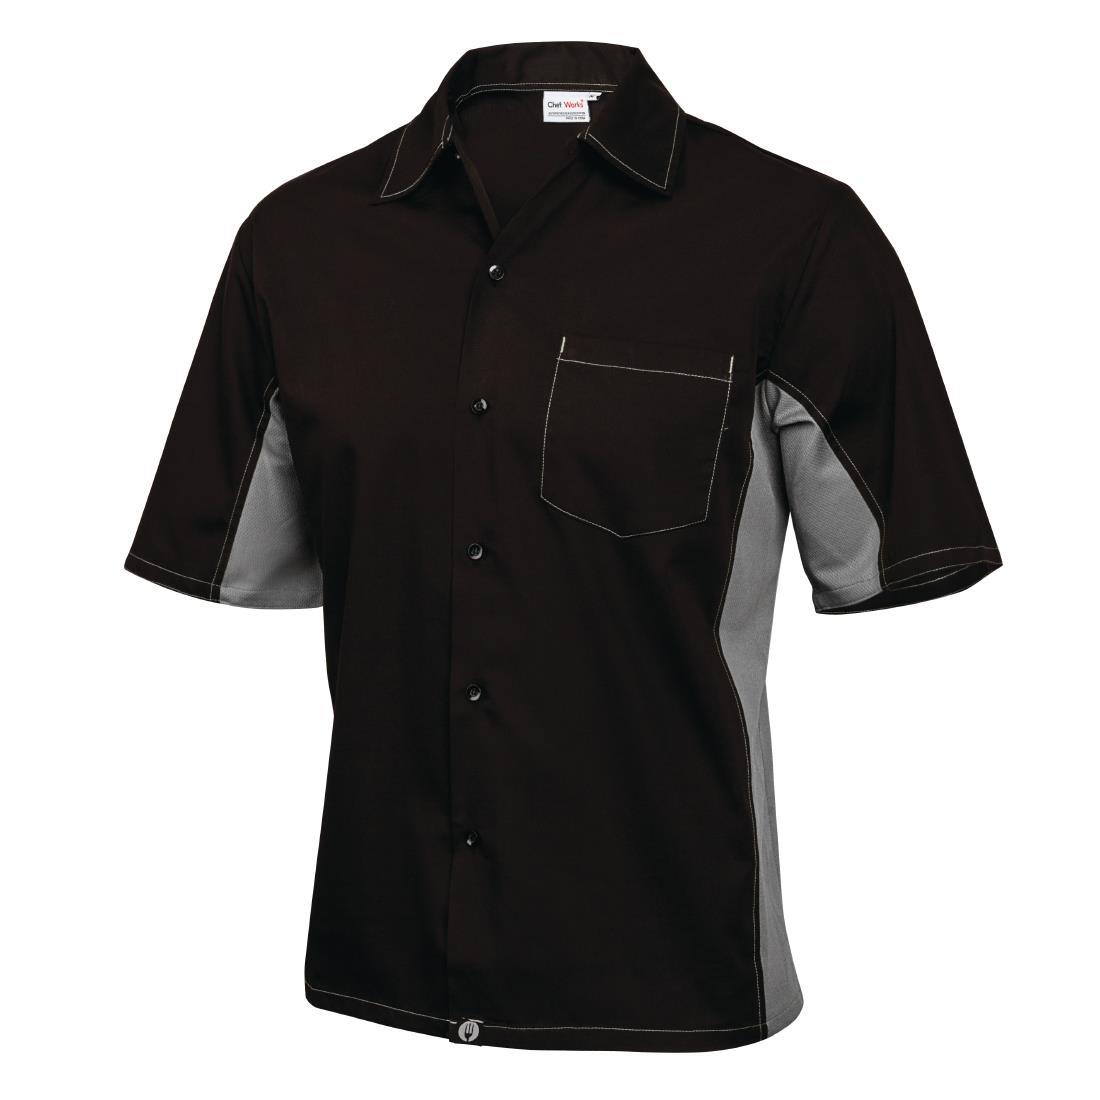 Chef Works Unisex Contrast Shirt Black and Grey 2XL - A948-XXL  - 2